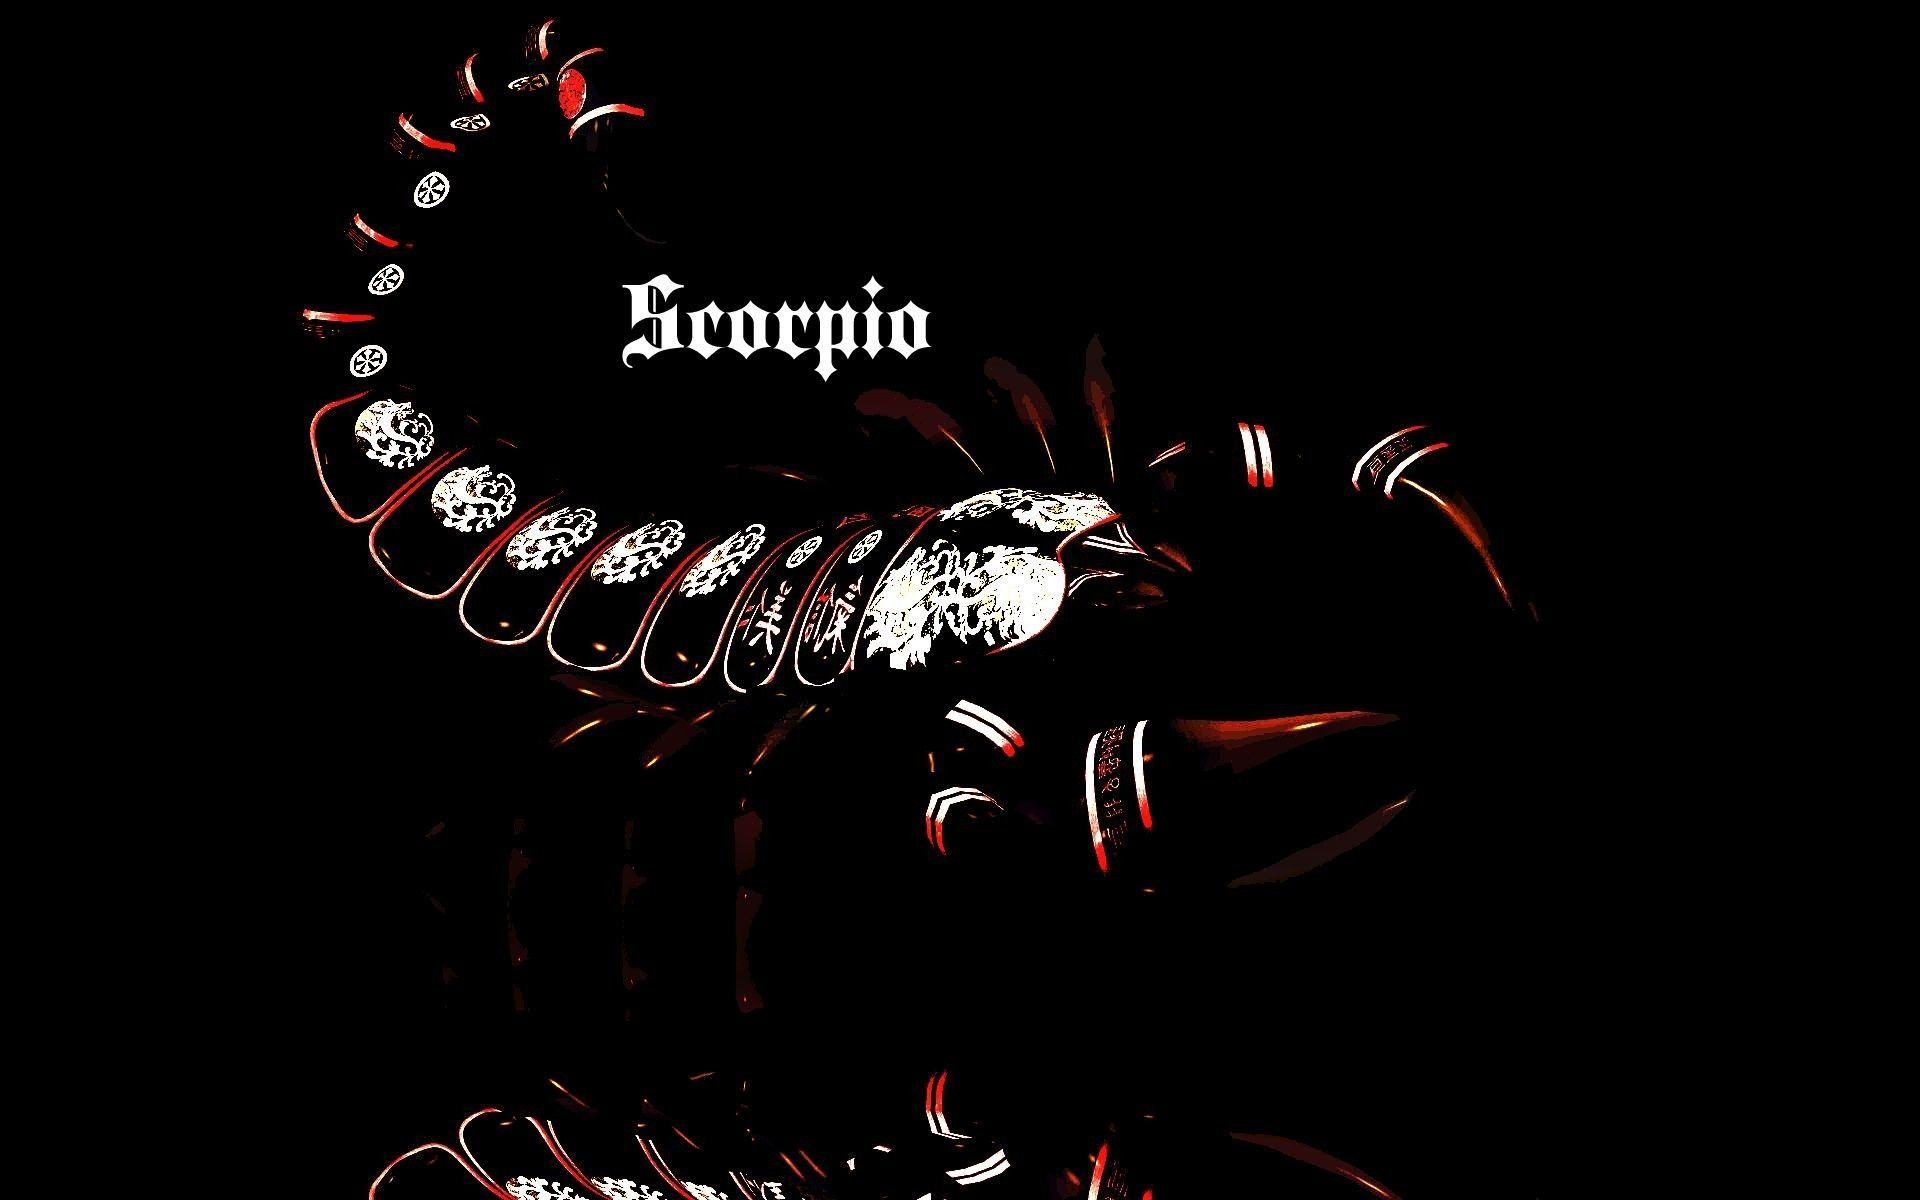 Scorpion wallpaper - 1071111 - Free wallpaper download - Wallpapers13.com - Scorpio